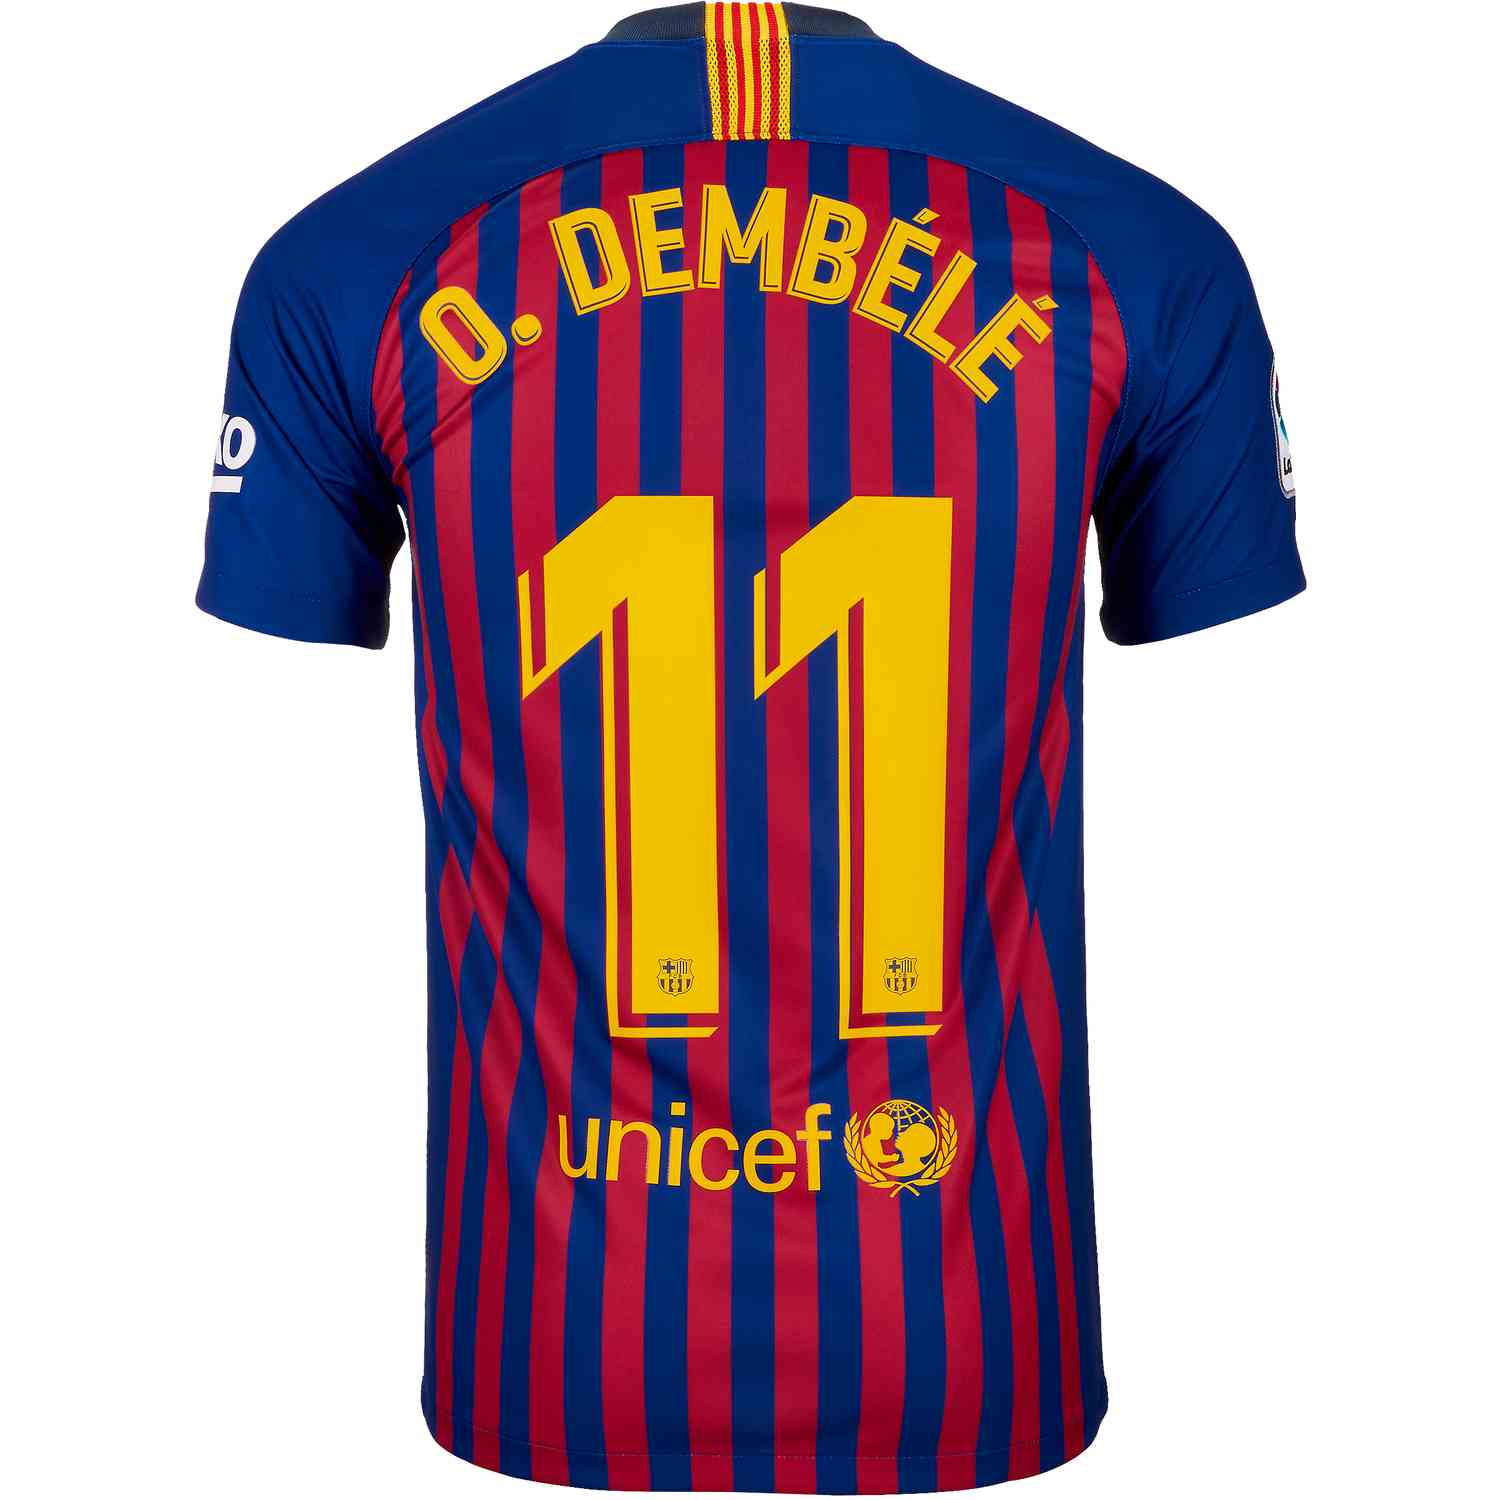 Nike Dembele Barcelona Home Jersey 